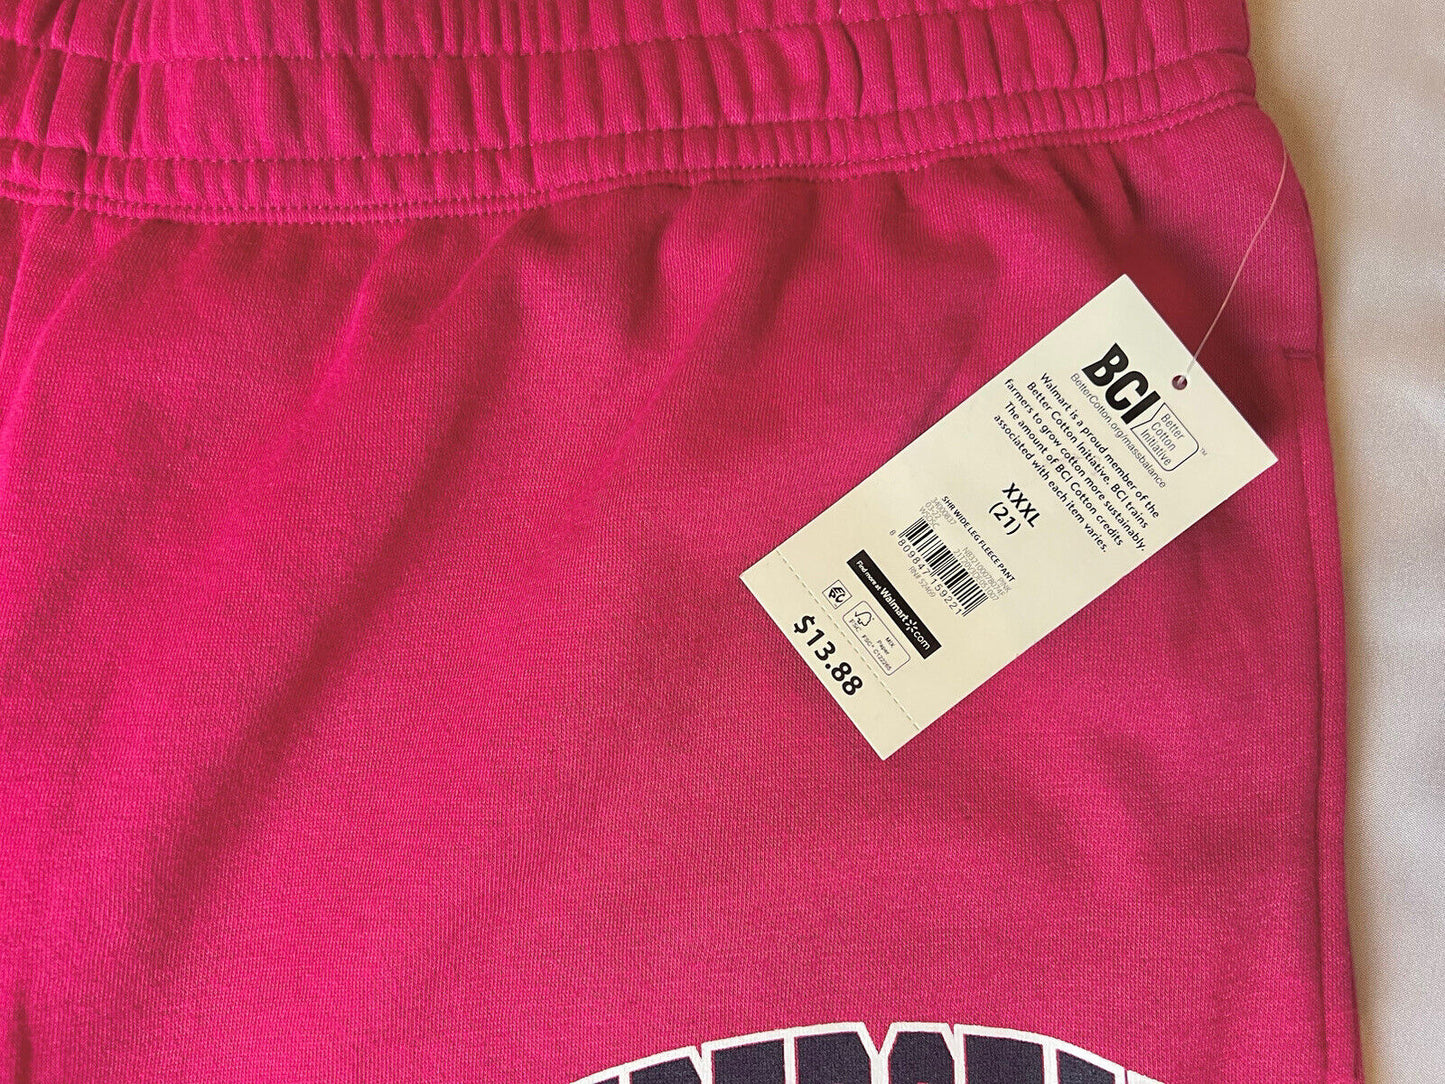 No Boundaries Women's Wide Leg Fleece Pants Pink Fuchsia Size 3XL